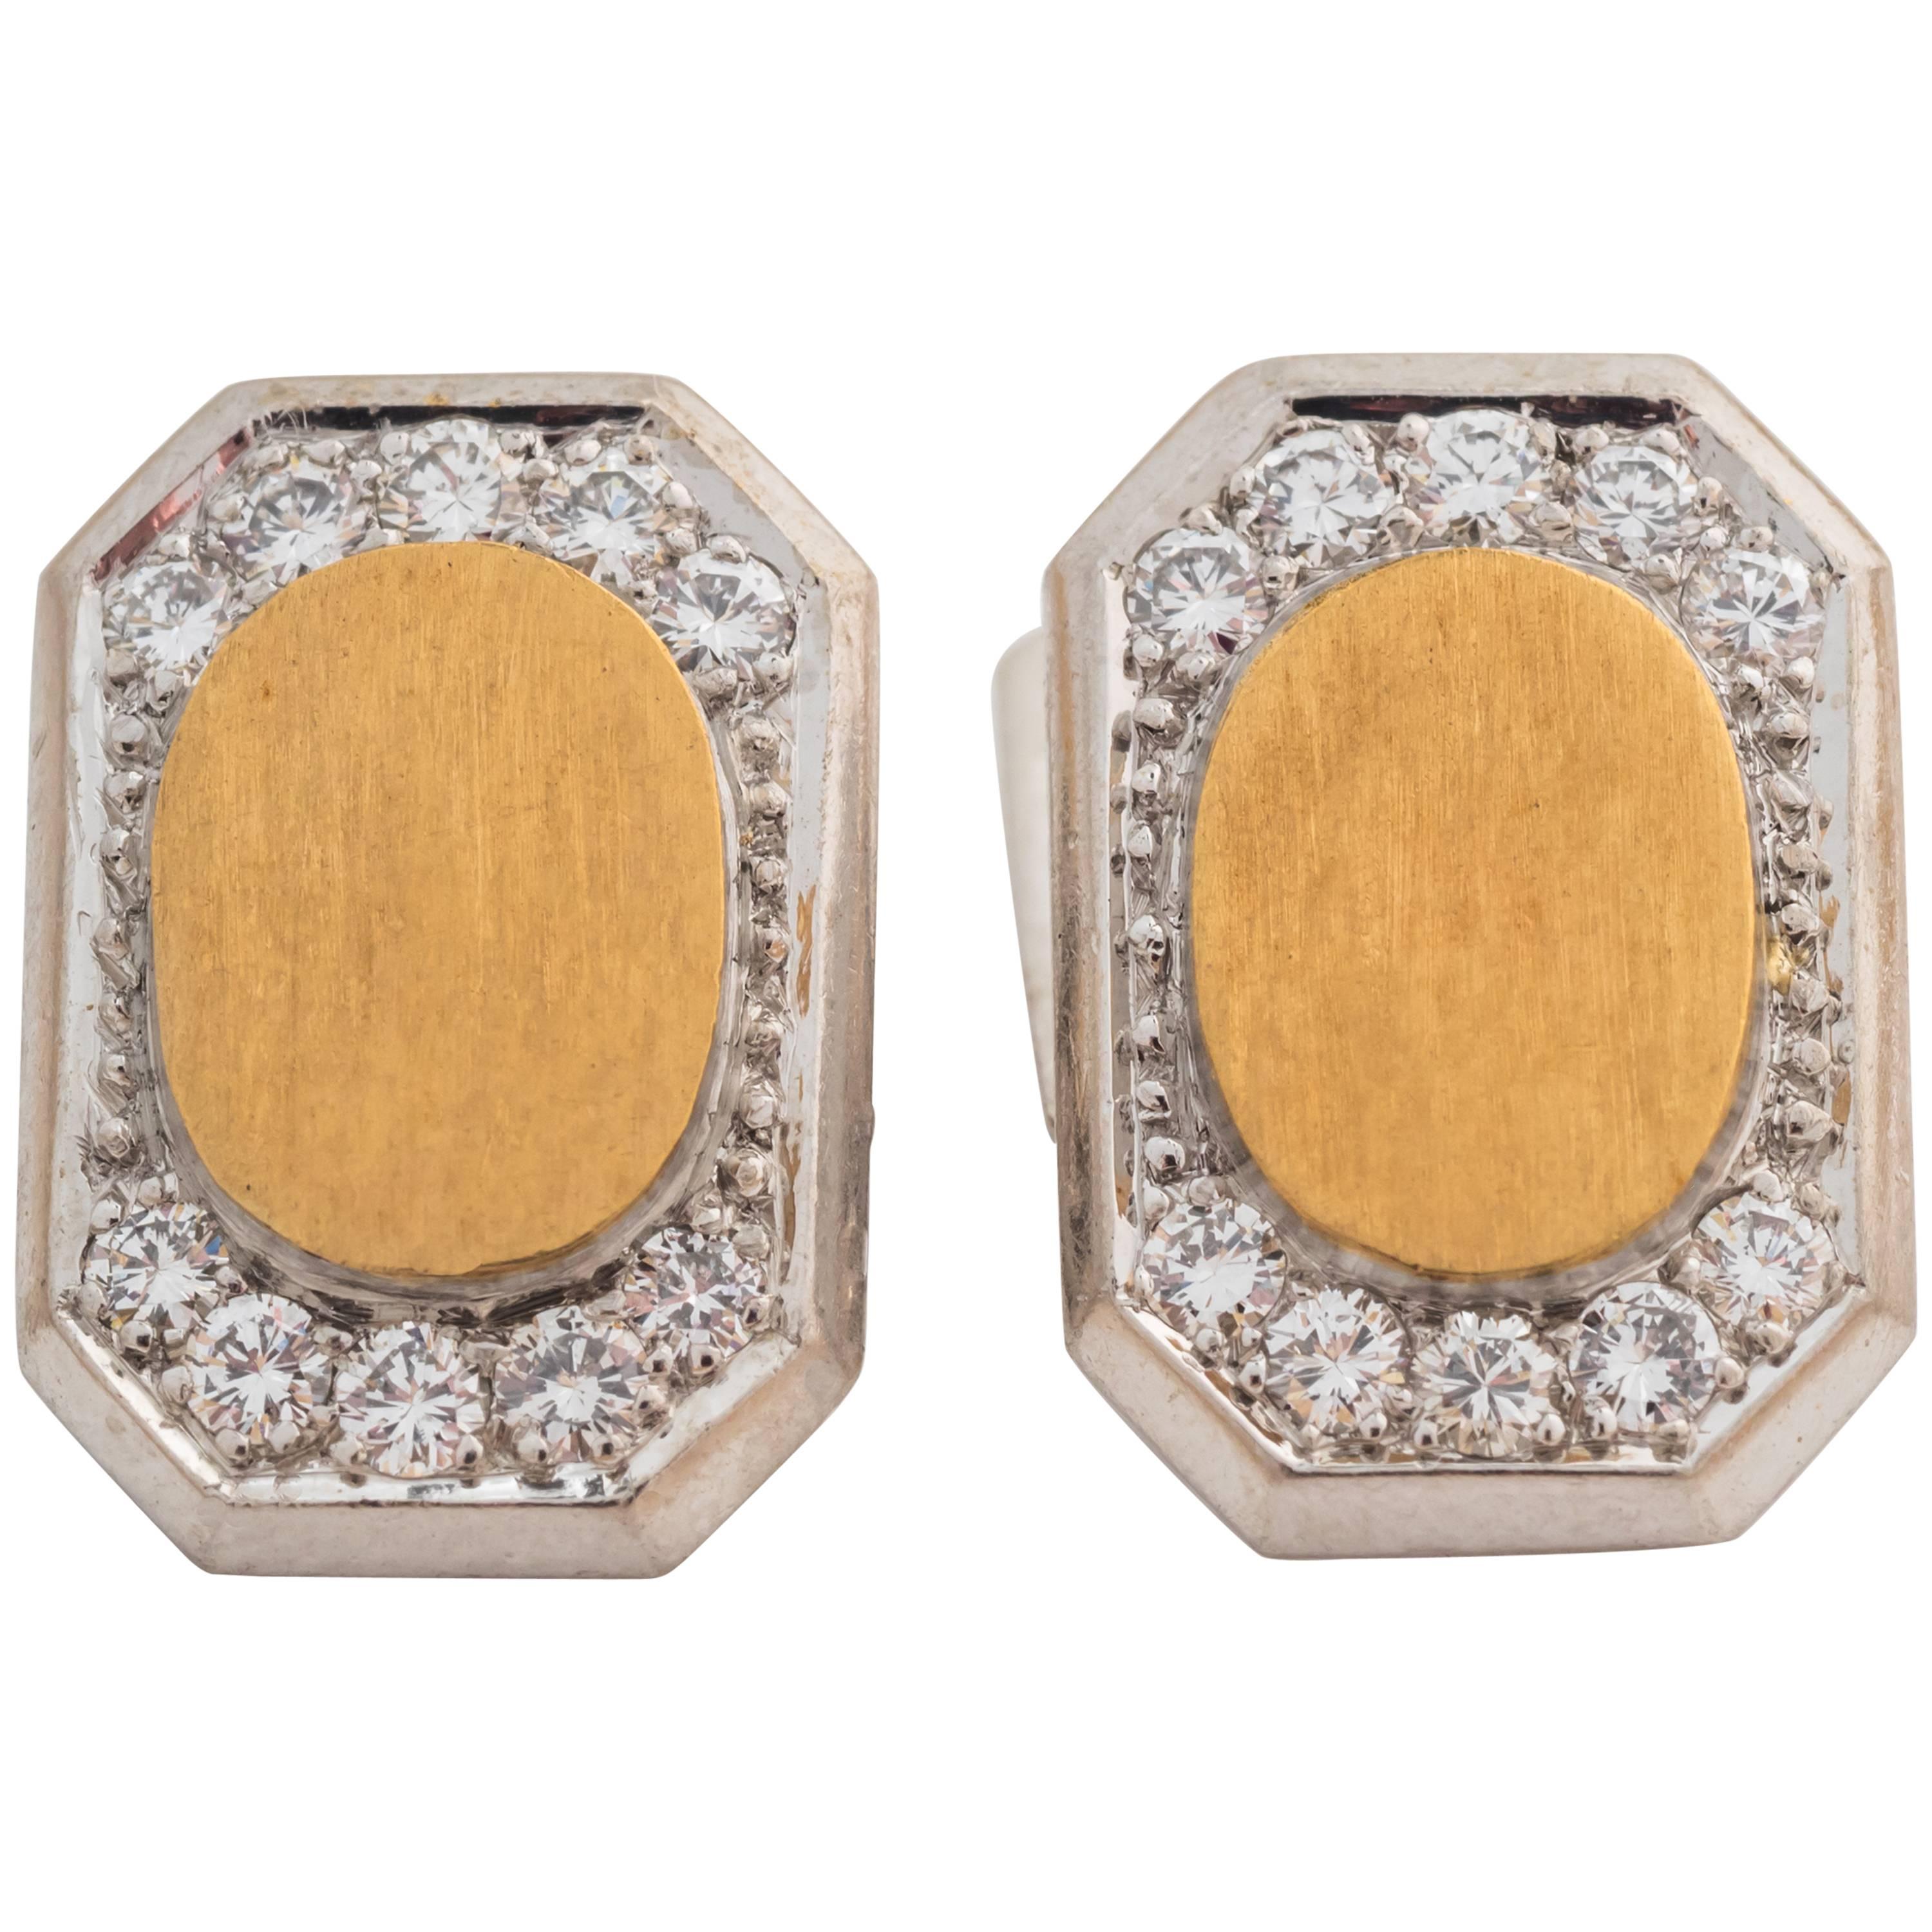 1950s Diamond Gold Platinum Cufflinks